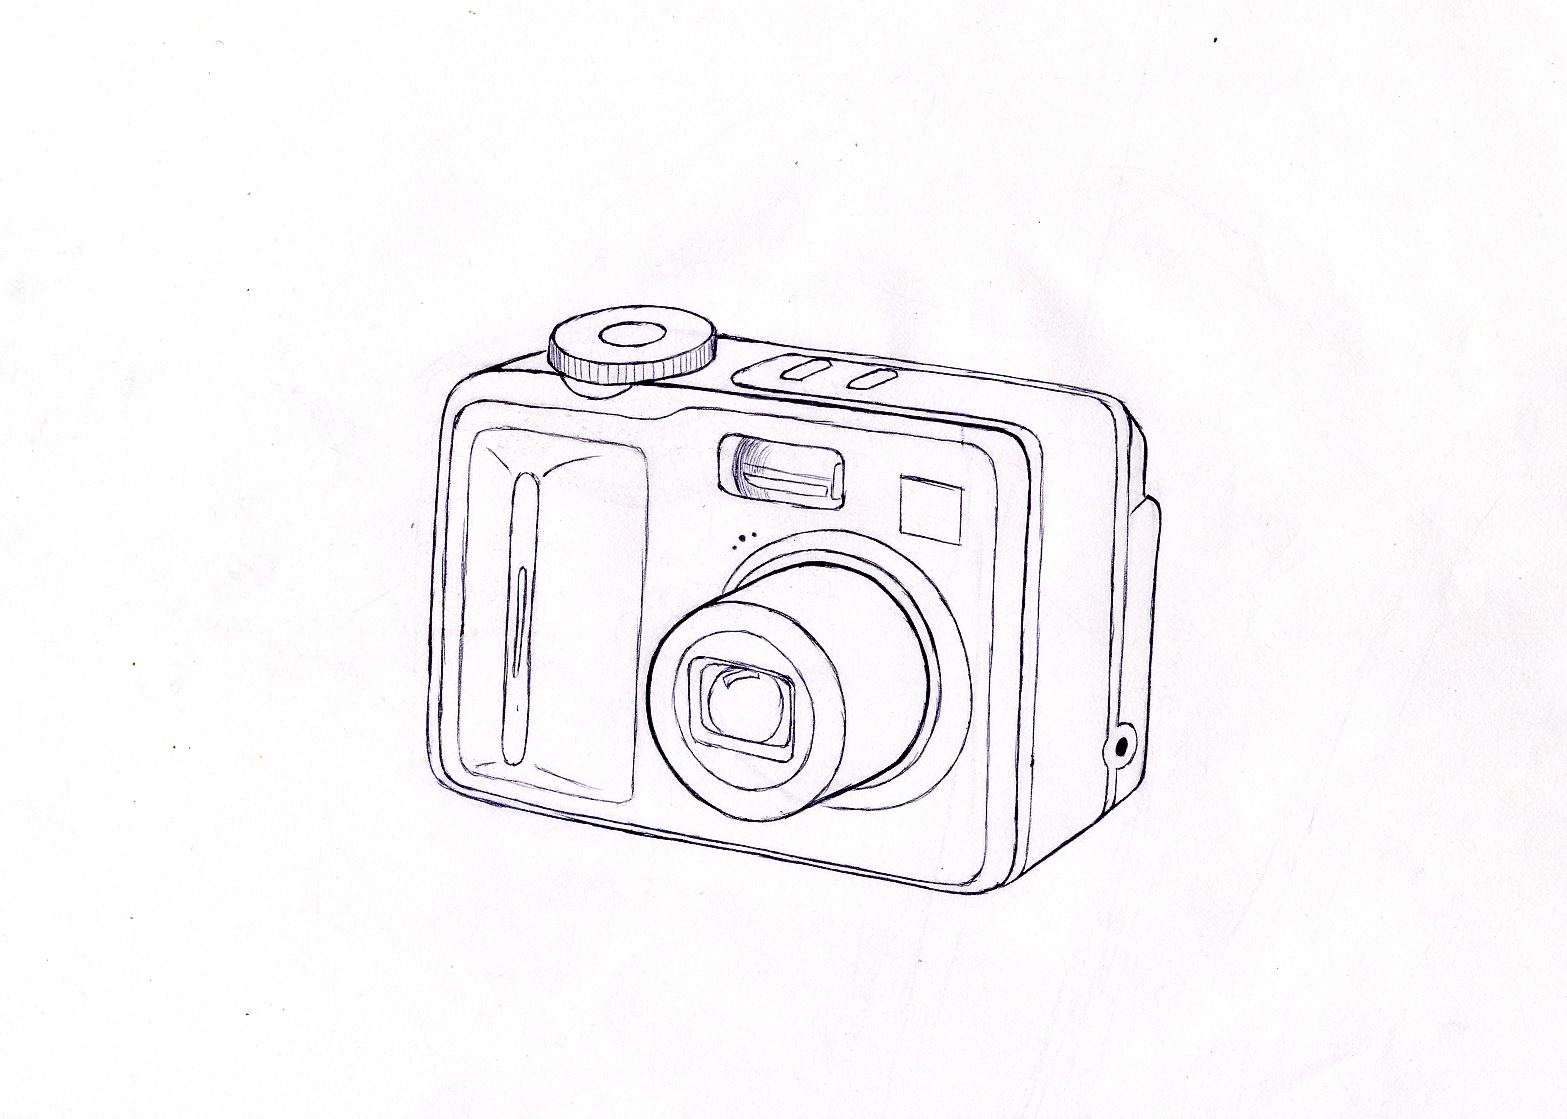 Kodak compact camera by ChameleonScales on DeviantArt